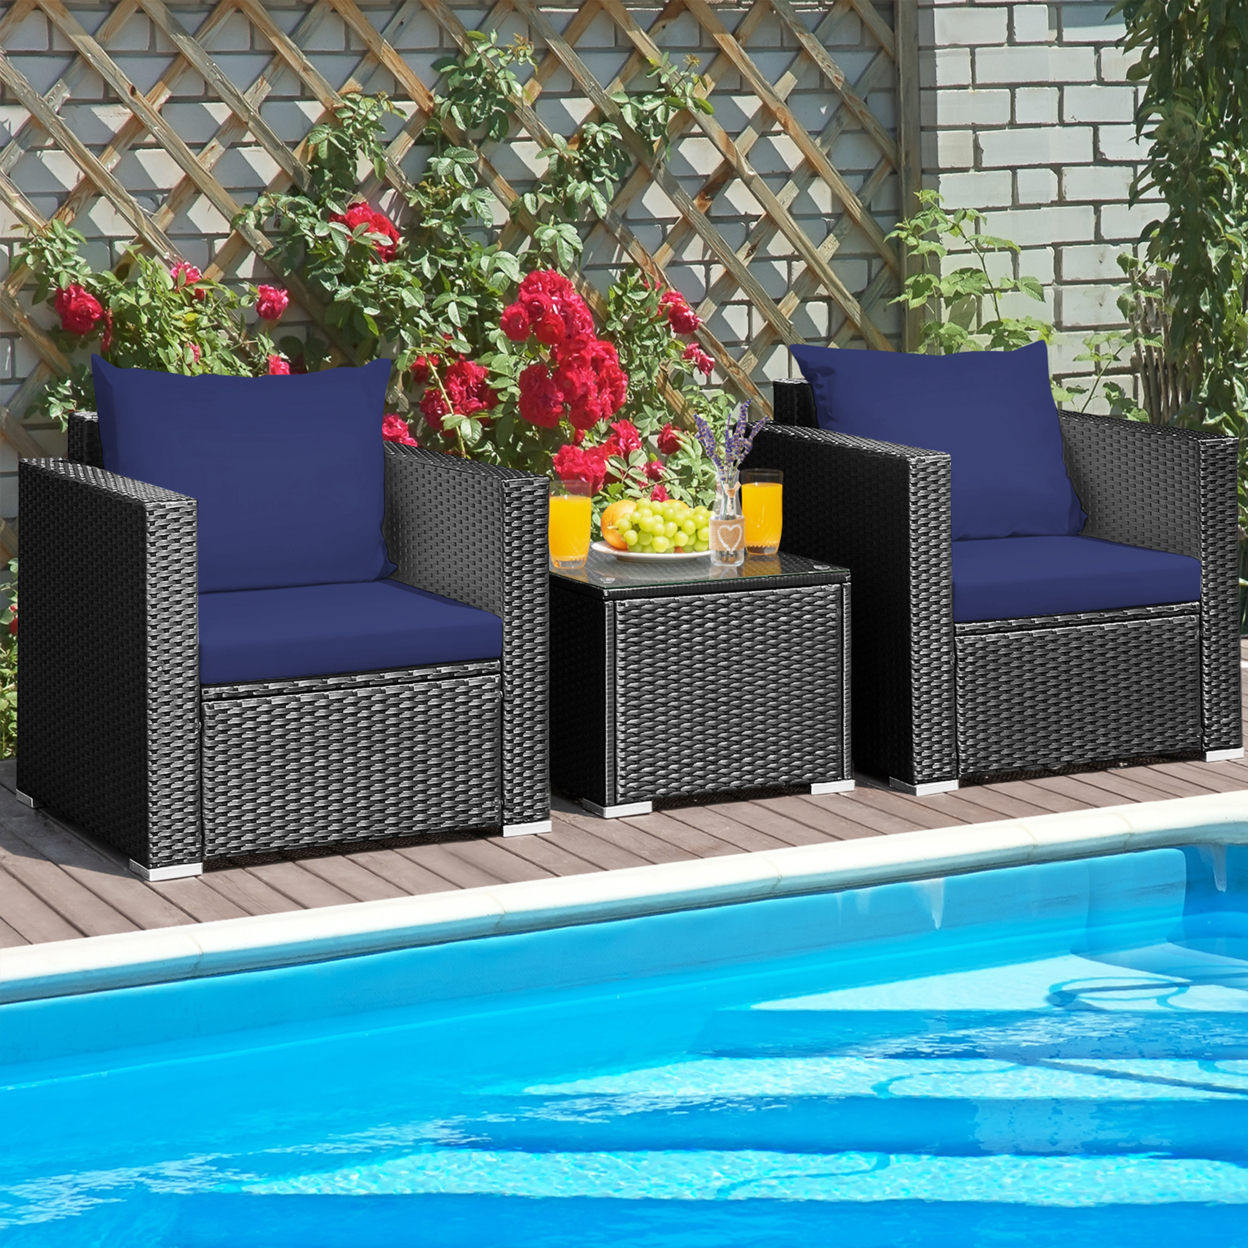 3PCS Rattan Patio Conversation Furniture Set Outdoor W/ Navy Cushions